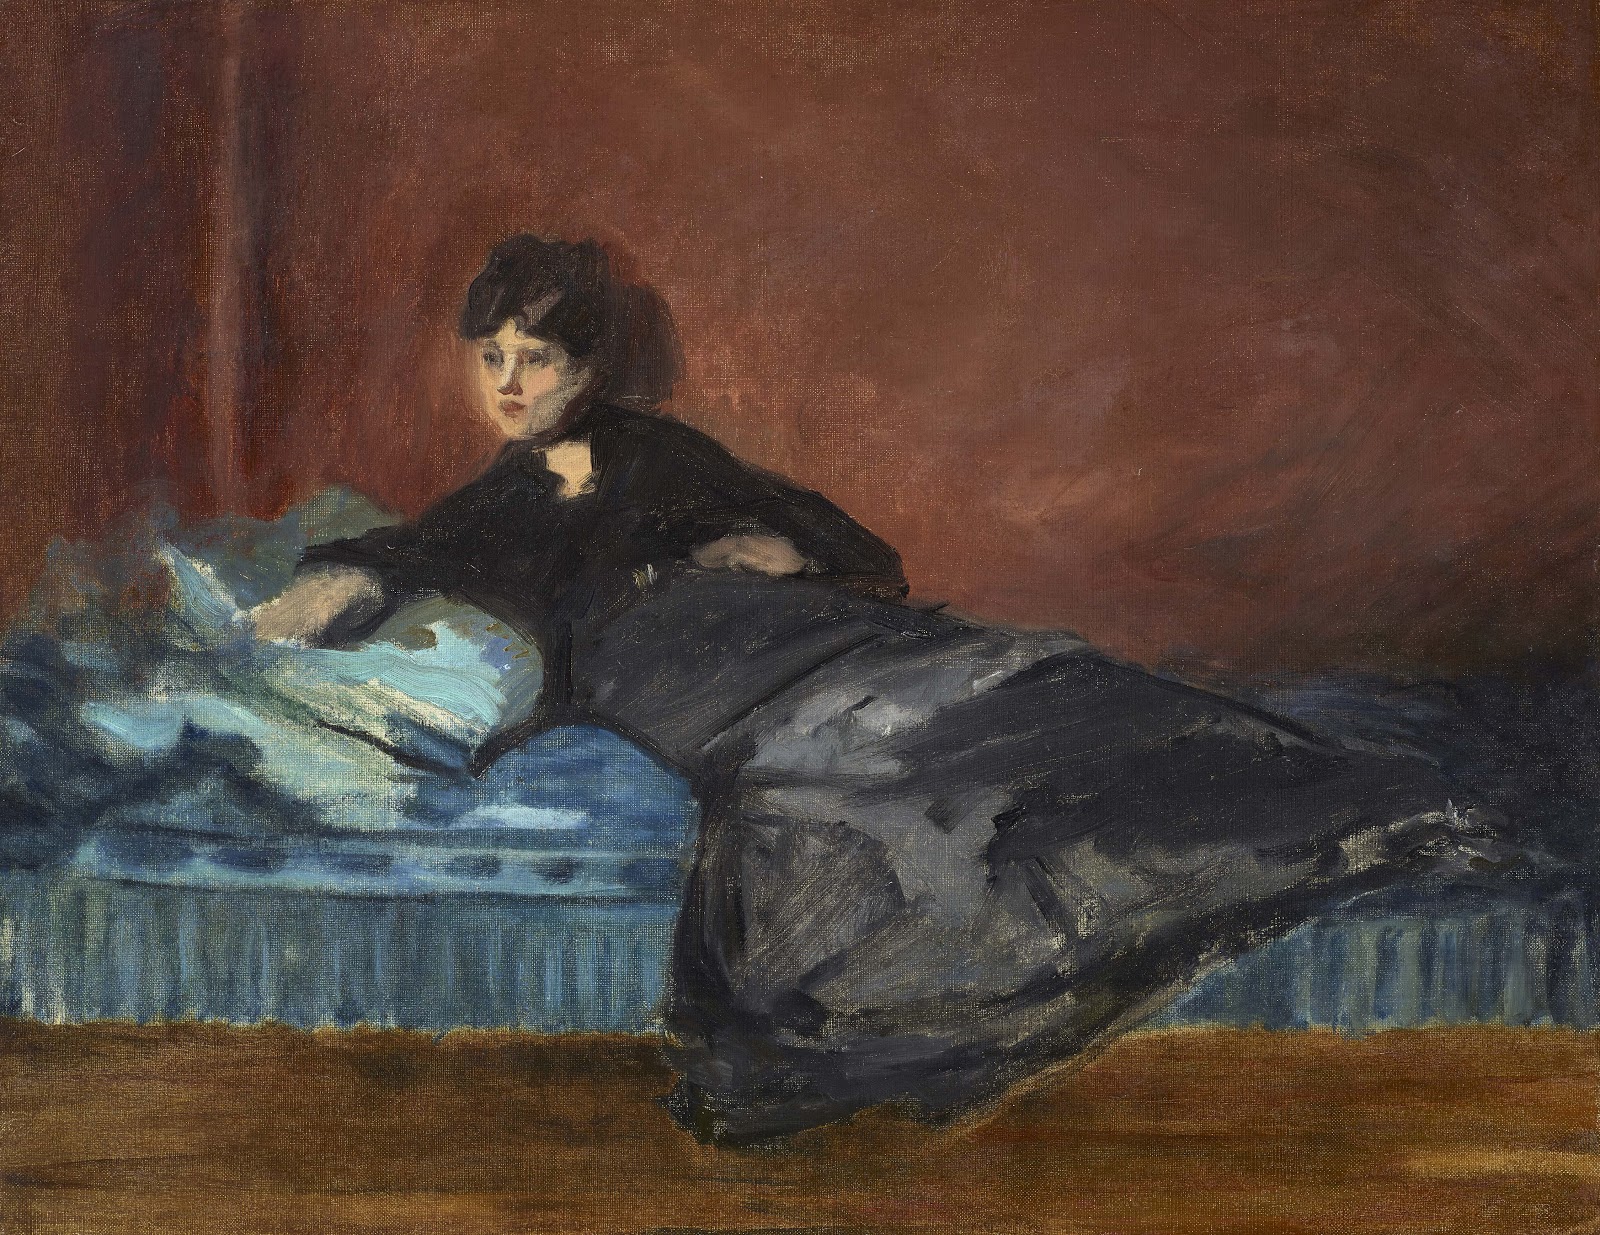 Edouard+Manet-1832-1883 (162).jpg